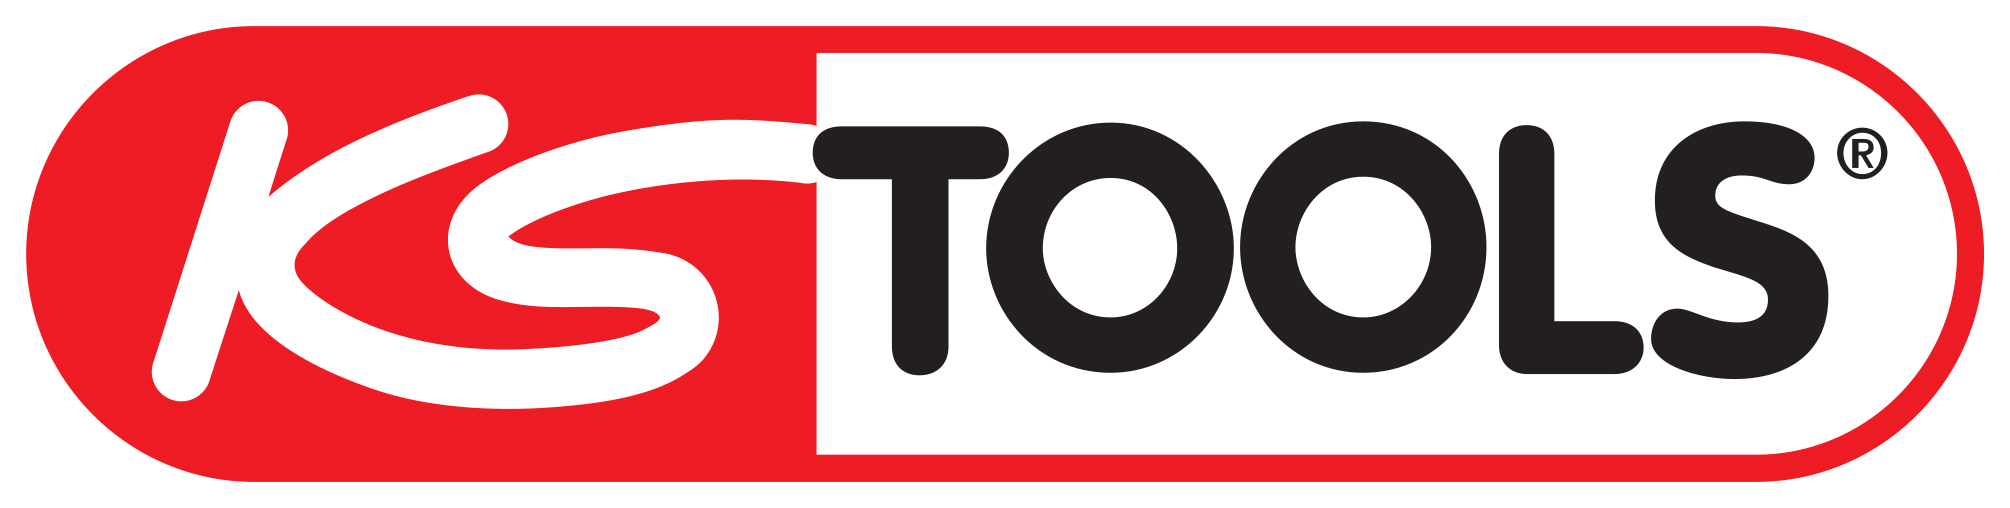 TCB AUTOS - logo KS Tools